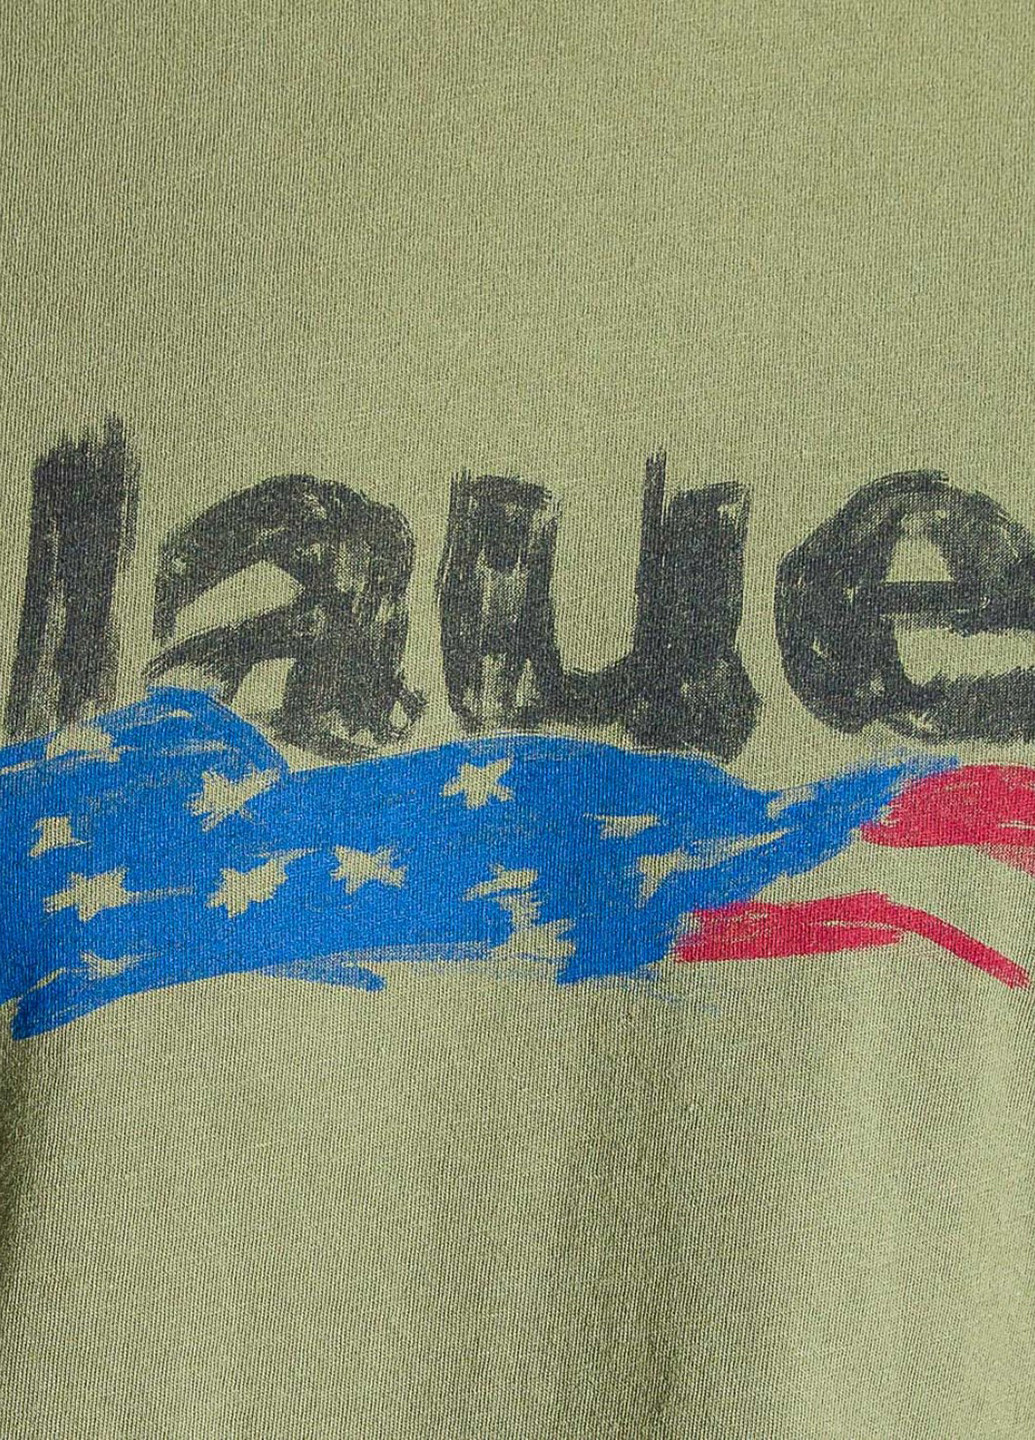 Хаки (оливковая) футболка Blauer